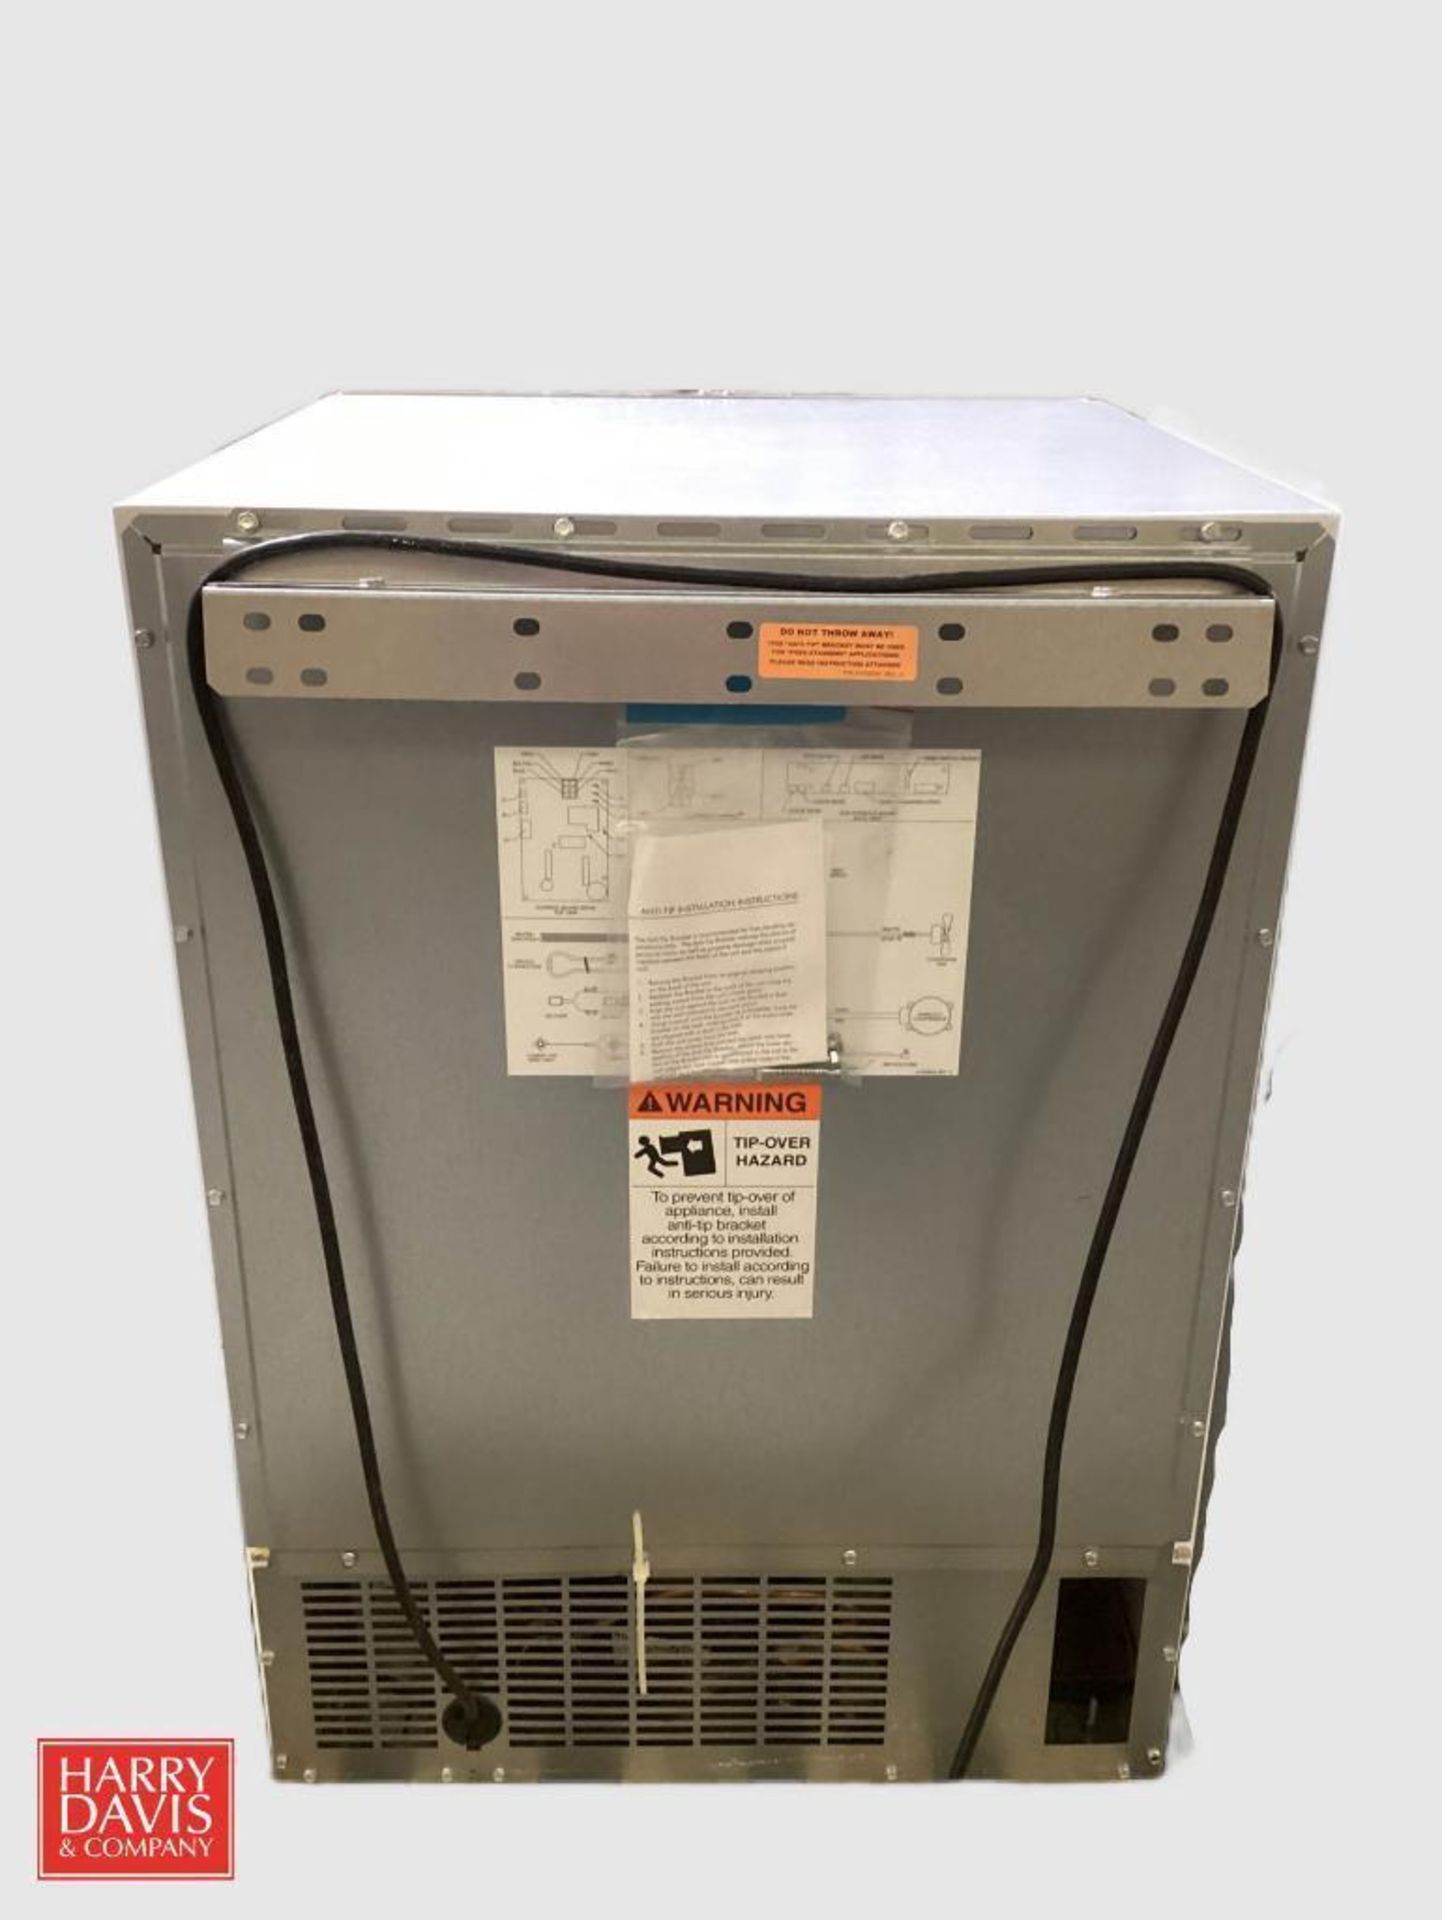 Marvel Scientific 6CRDE012 24" Undercounter Refrigerator/Freezer - Image 3 of 3